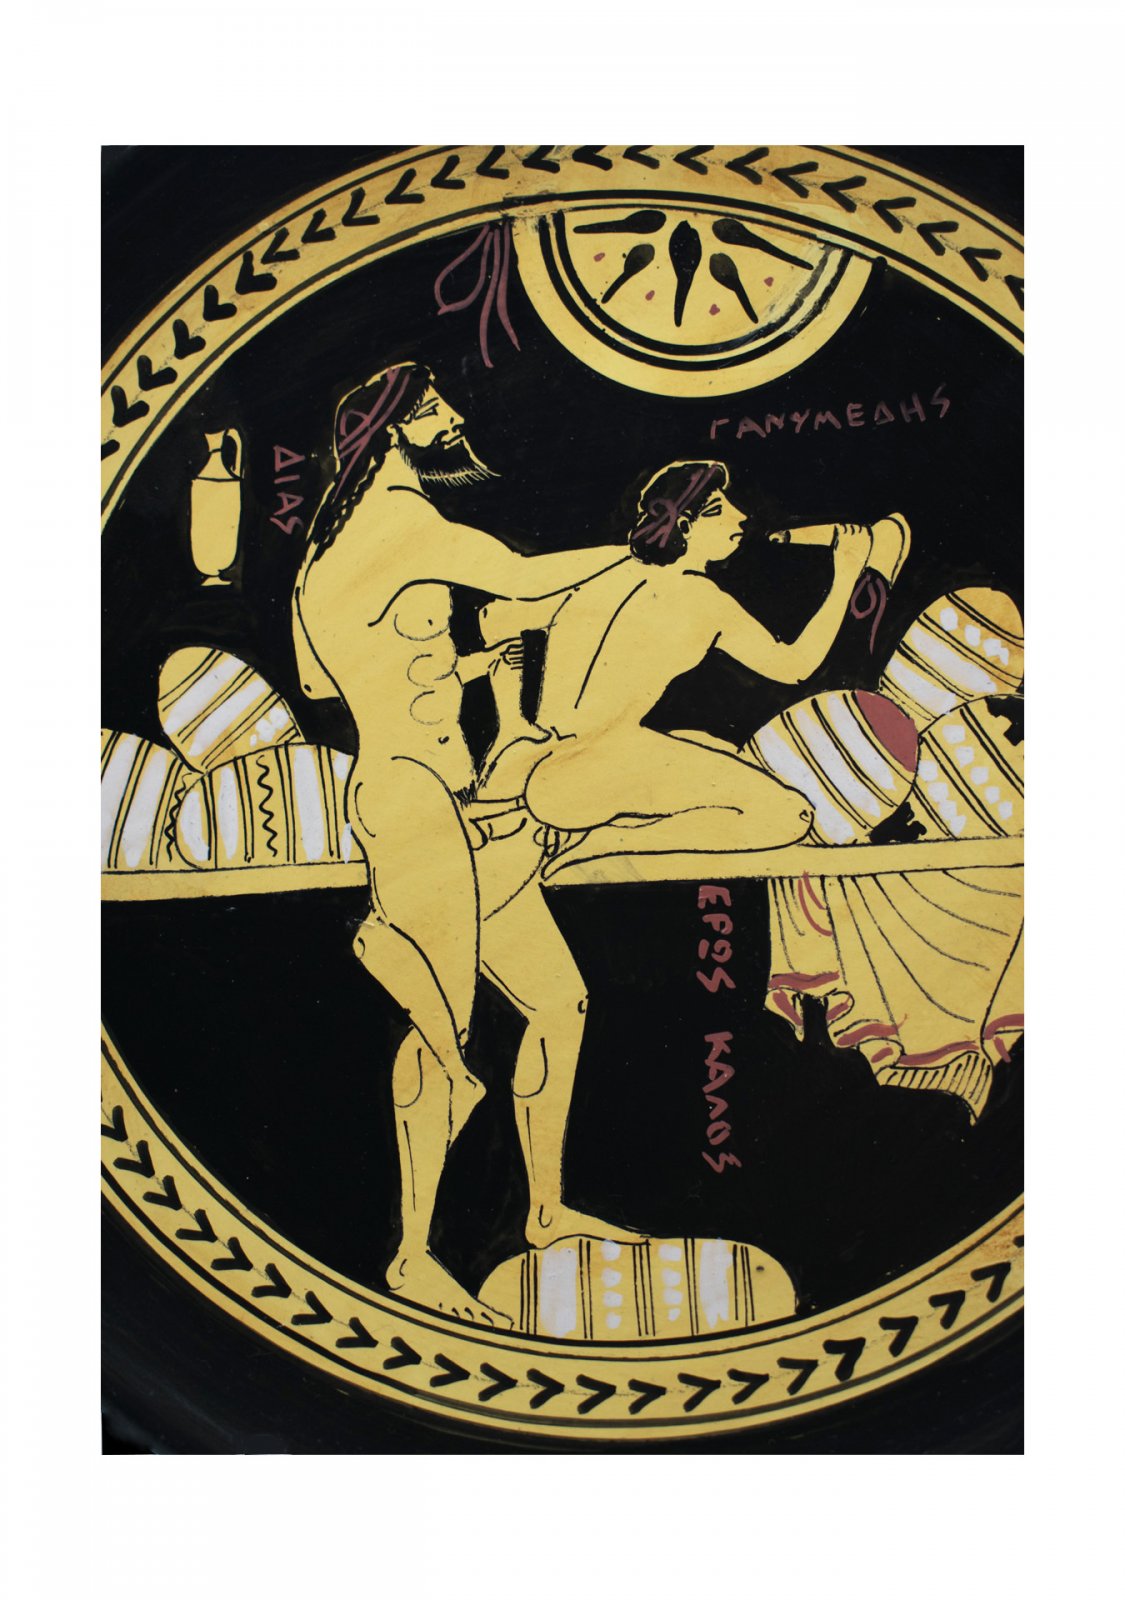 Classical Greek ceramic plate depicting Zeus and Ganymede